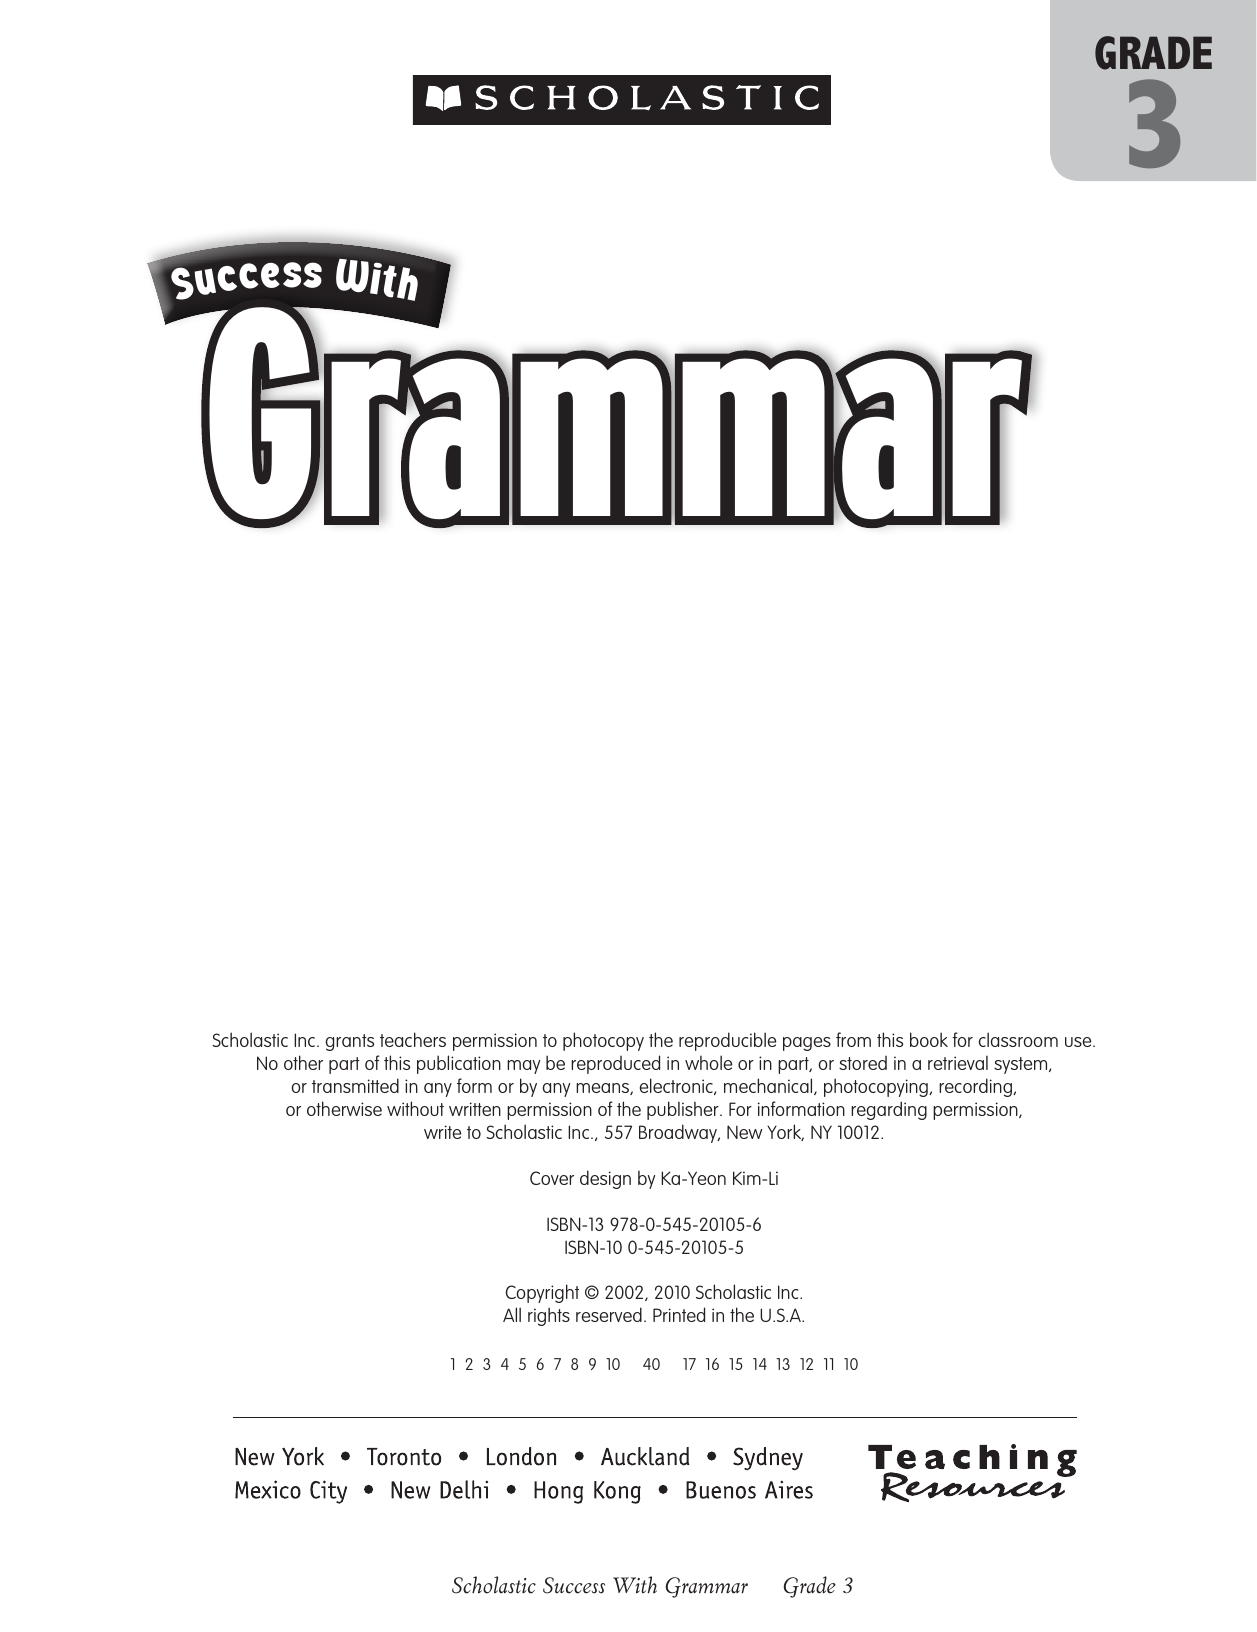 Scholastic Success with Grammar Grade